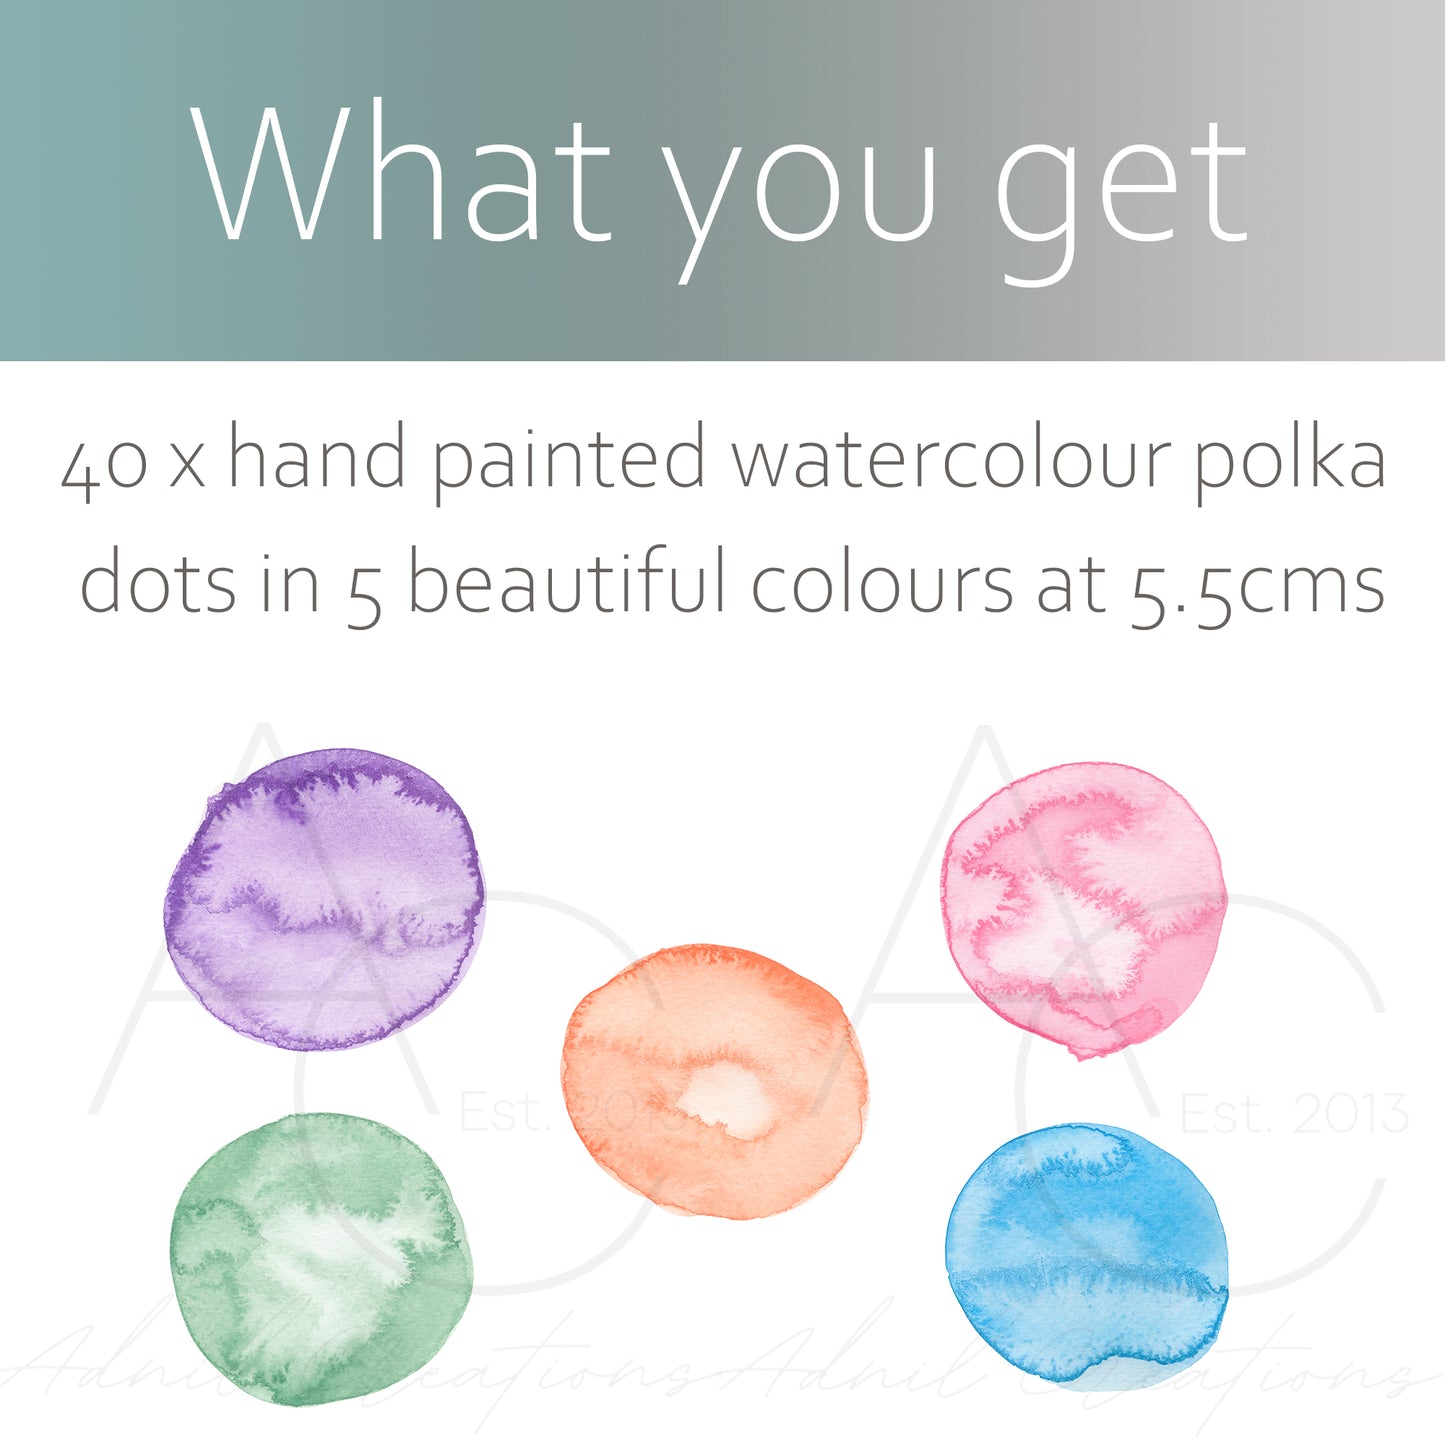 Watercolour polka dots | Fabric wall stickers